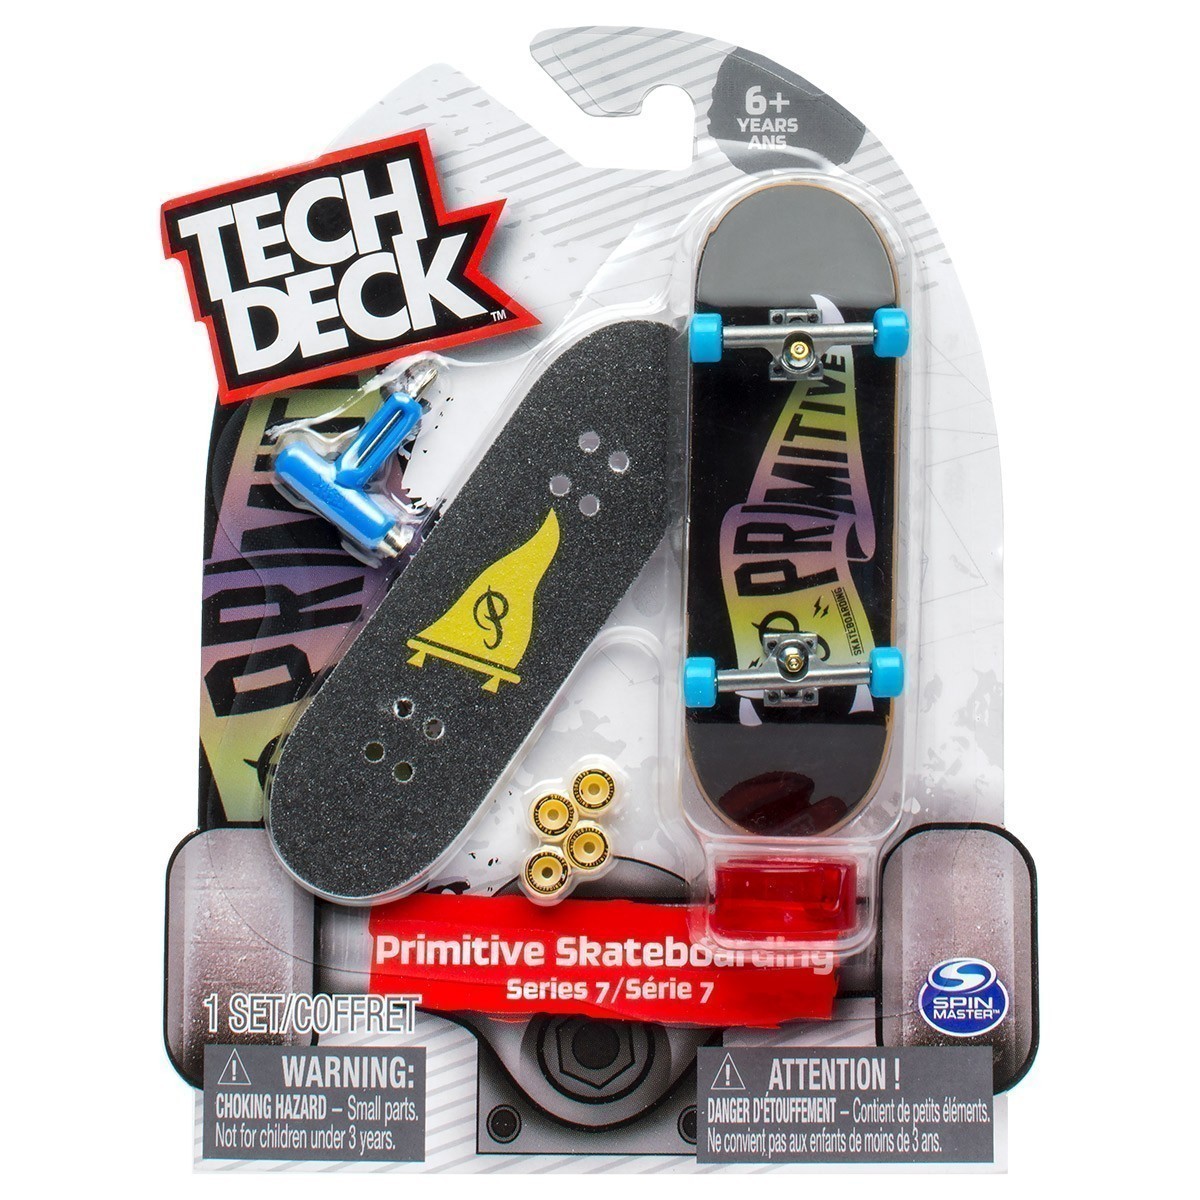 Tech Deck - Series 7 Fingerboards Promitive Skateboarding